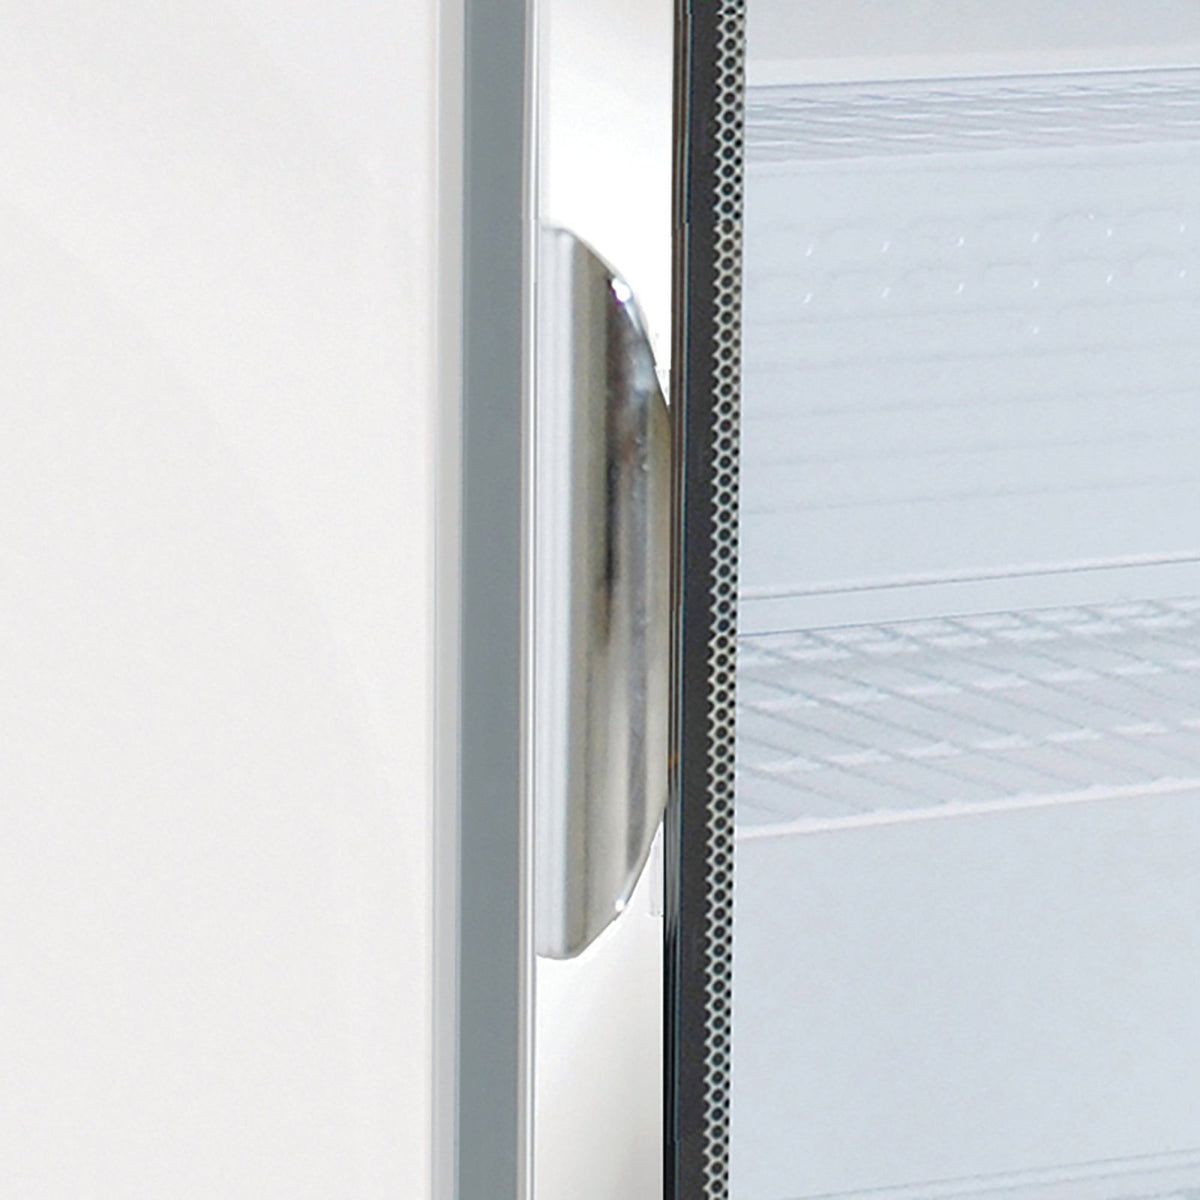 Maxx Cold MXM1 - 2RHC X - Series Countertop Merchandiser Refrigerator, 22.4"W, 2.1 cu. ft. Storage Capacity, in White - TheChefStore.Com